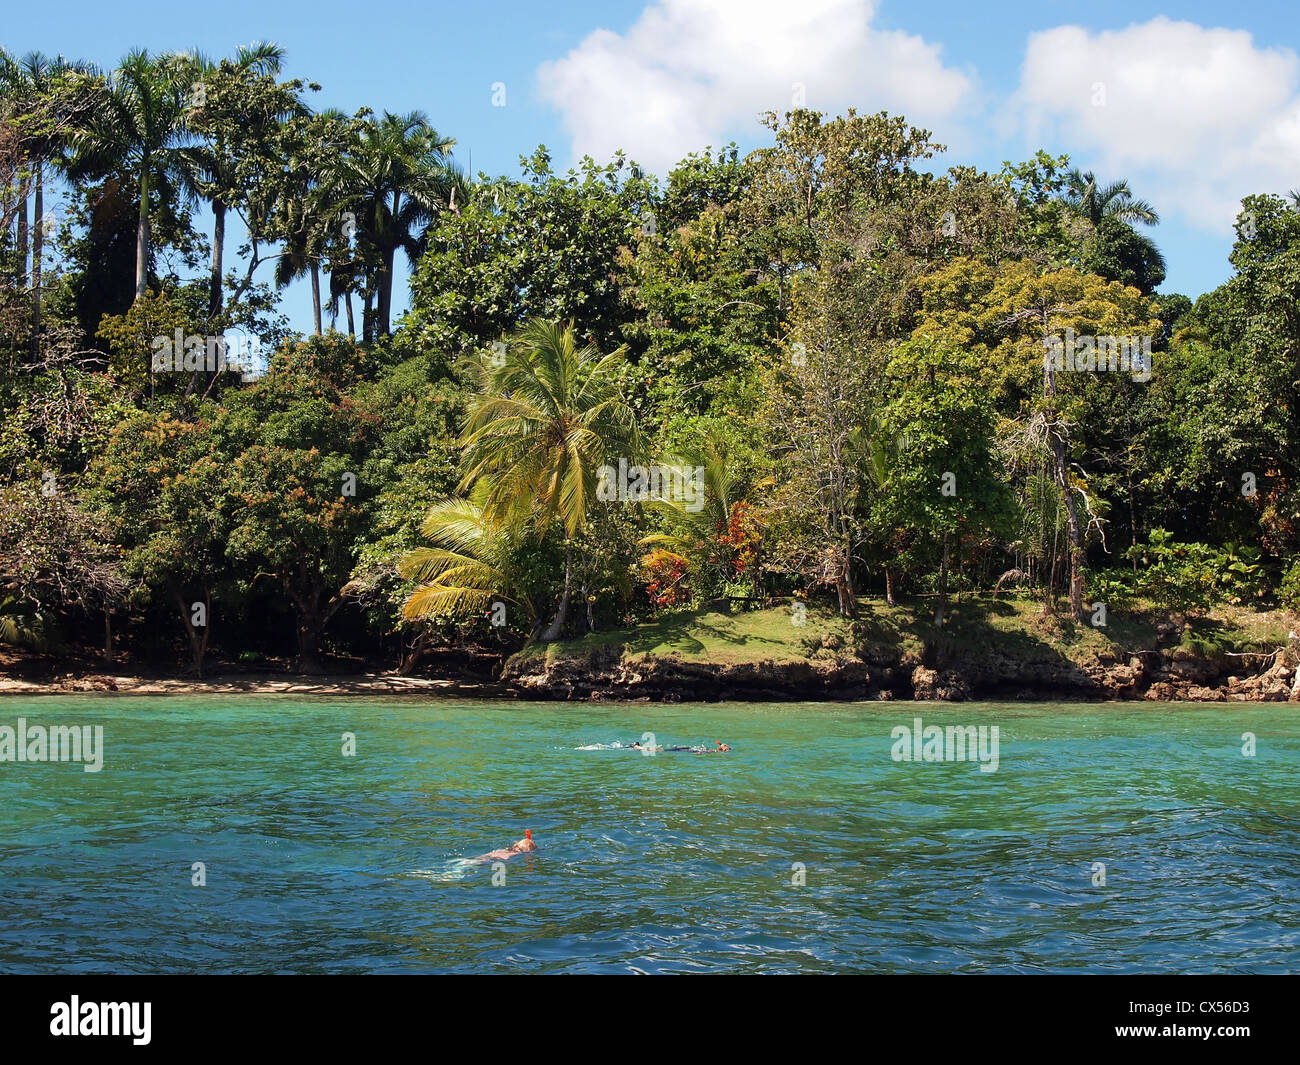 Two people snorkeling in the sea near tropical coast with lush vegetation, Caribbean, Bocas del Toro, Panama Stock Photo